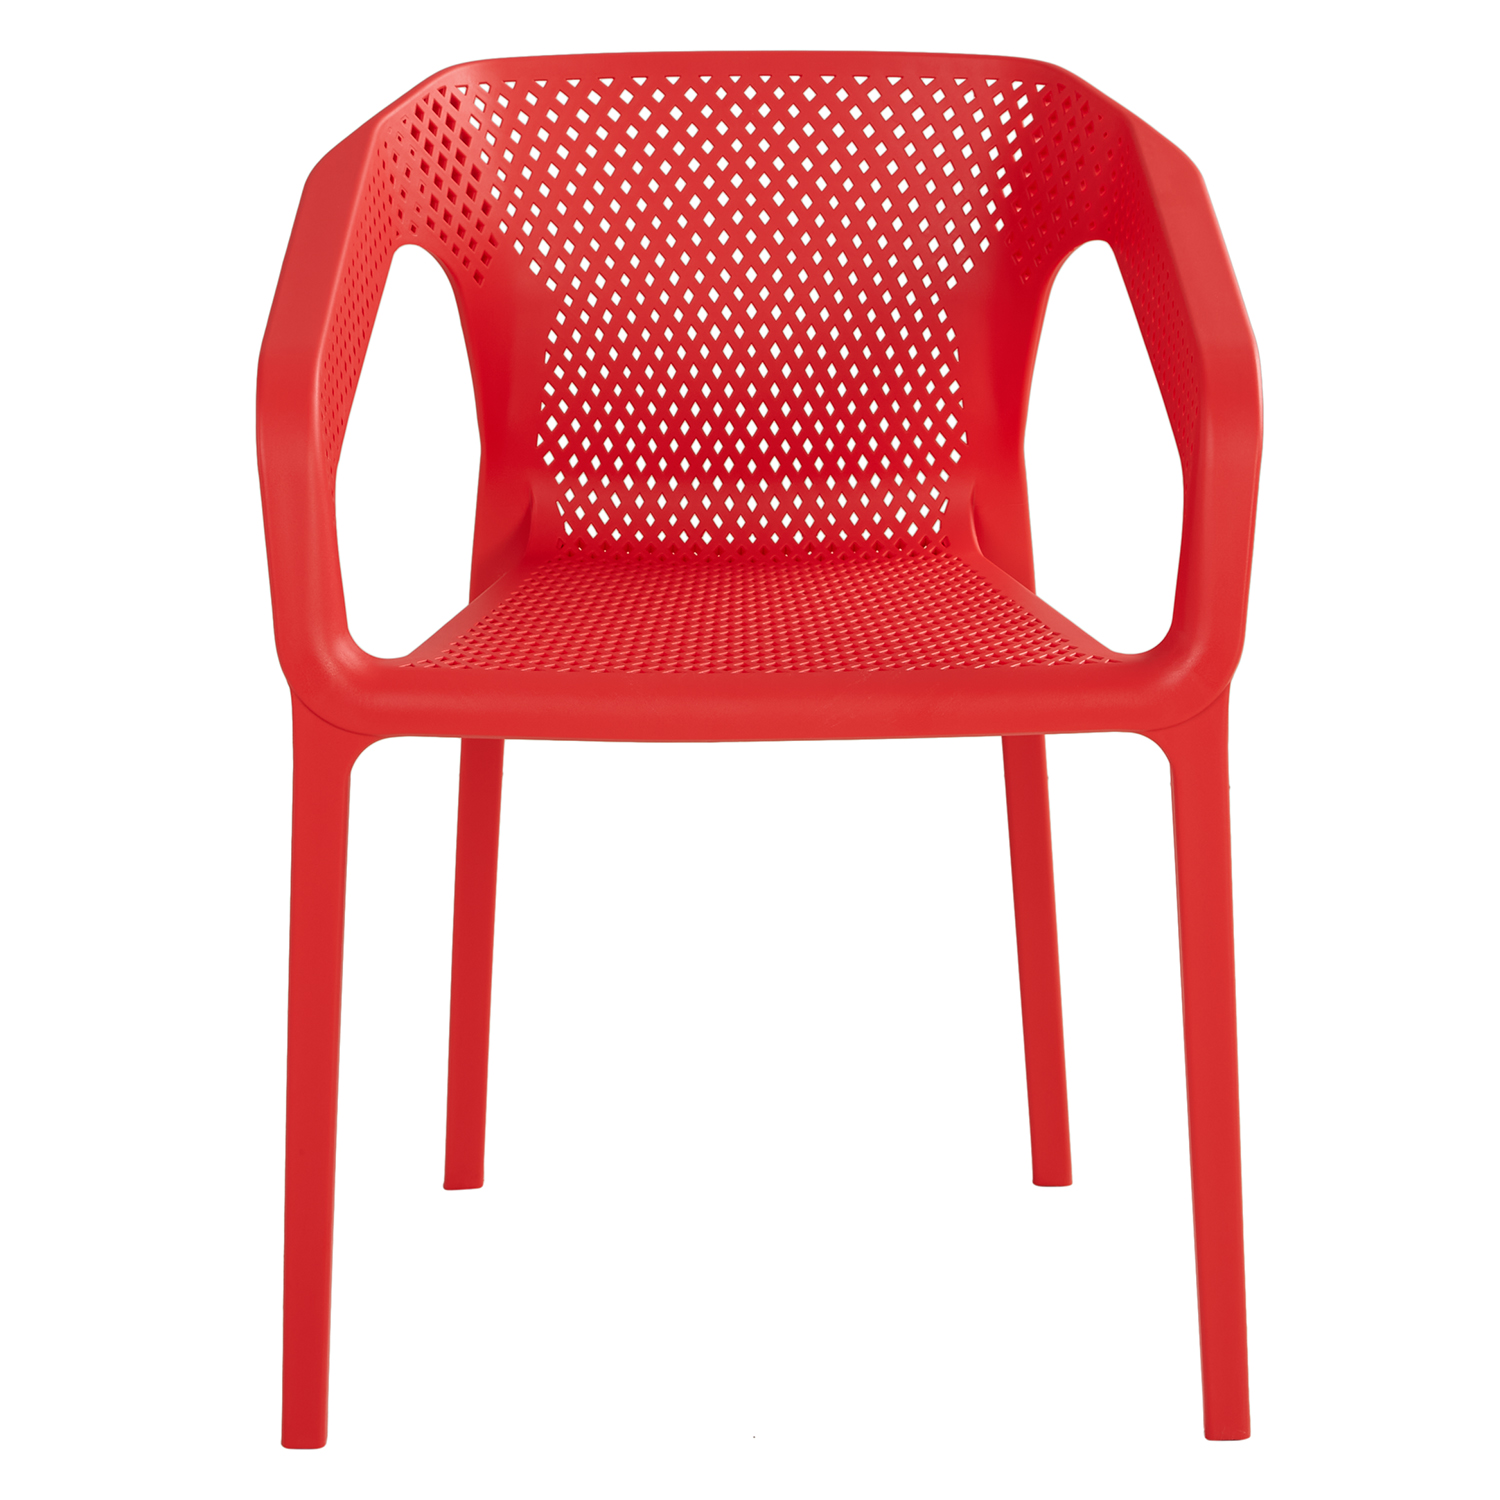 Gartenstuhl mit Armlehnen 4er Set Gartensessel Rot Stühle Kunststoff Stapelstühle Balkonstuhl Outdoor-Stuhl